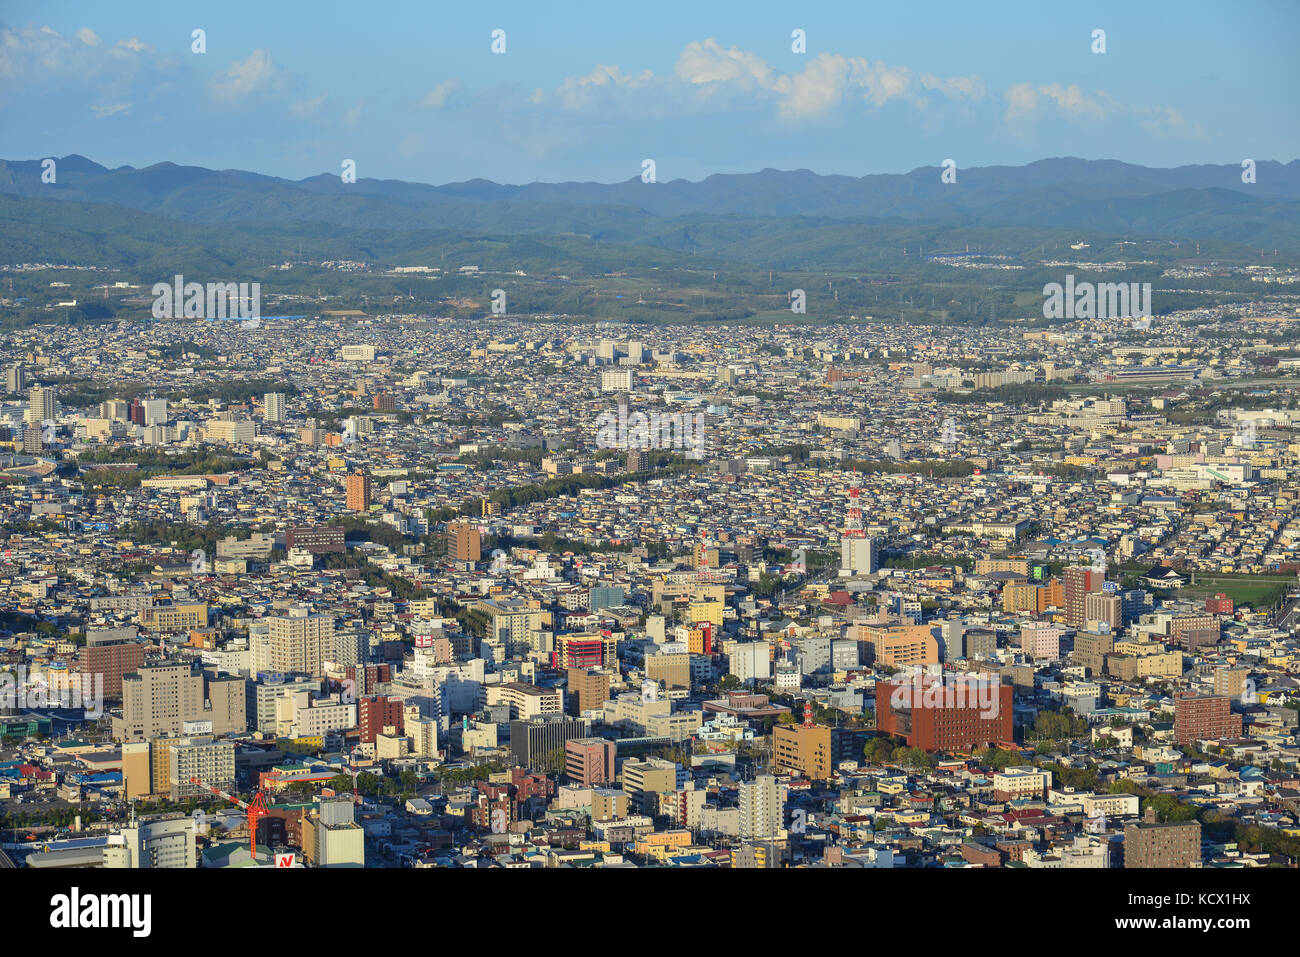 Hokkaido, Japan - Sep 30, 2017 Luftbild der Stadt Hakodate in Hokkaido, Japan hakodate ist jetzt der drittgrößte in Hokkaido nach Sapporo und Asahi Stockfoto